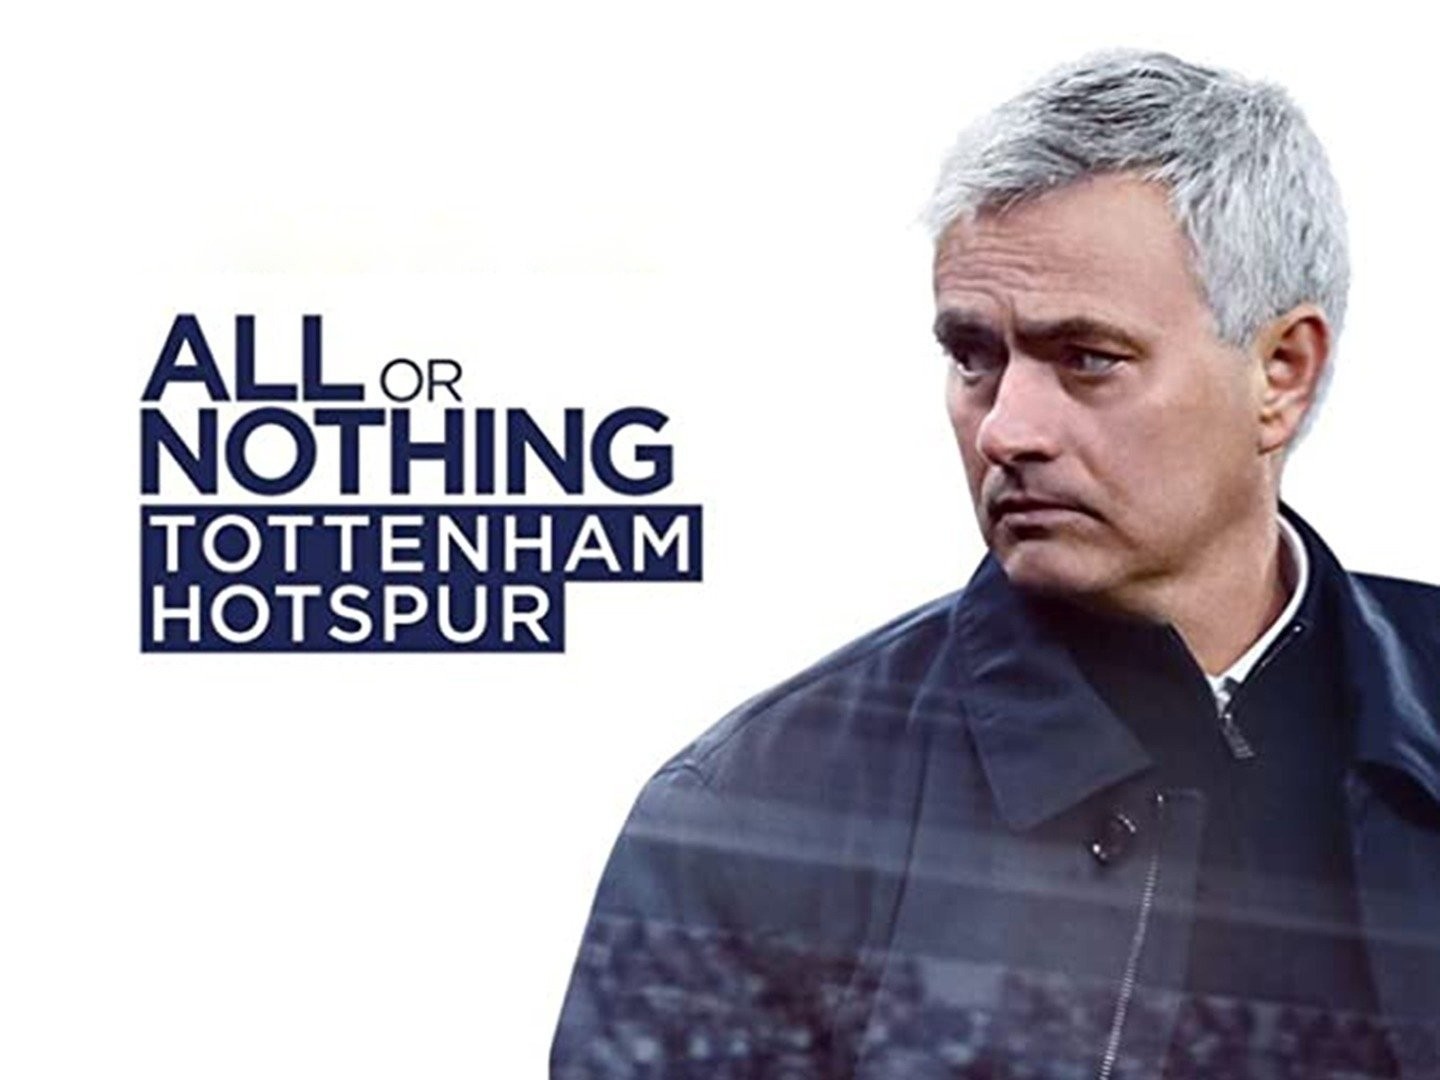 All or Nothing: Tottenham Hotspur (TV Mini Series 2020) - IMDb